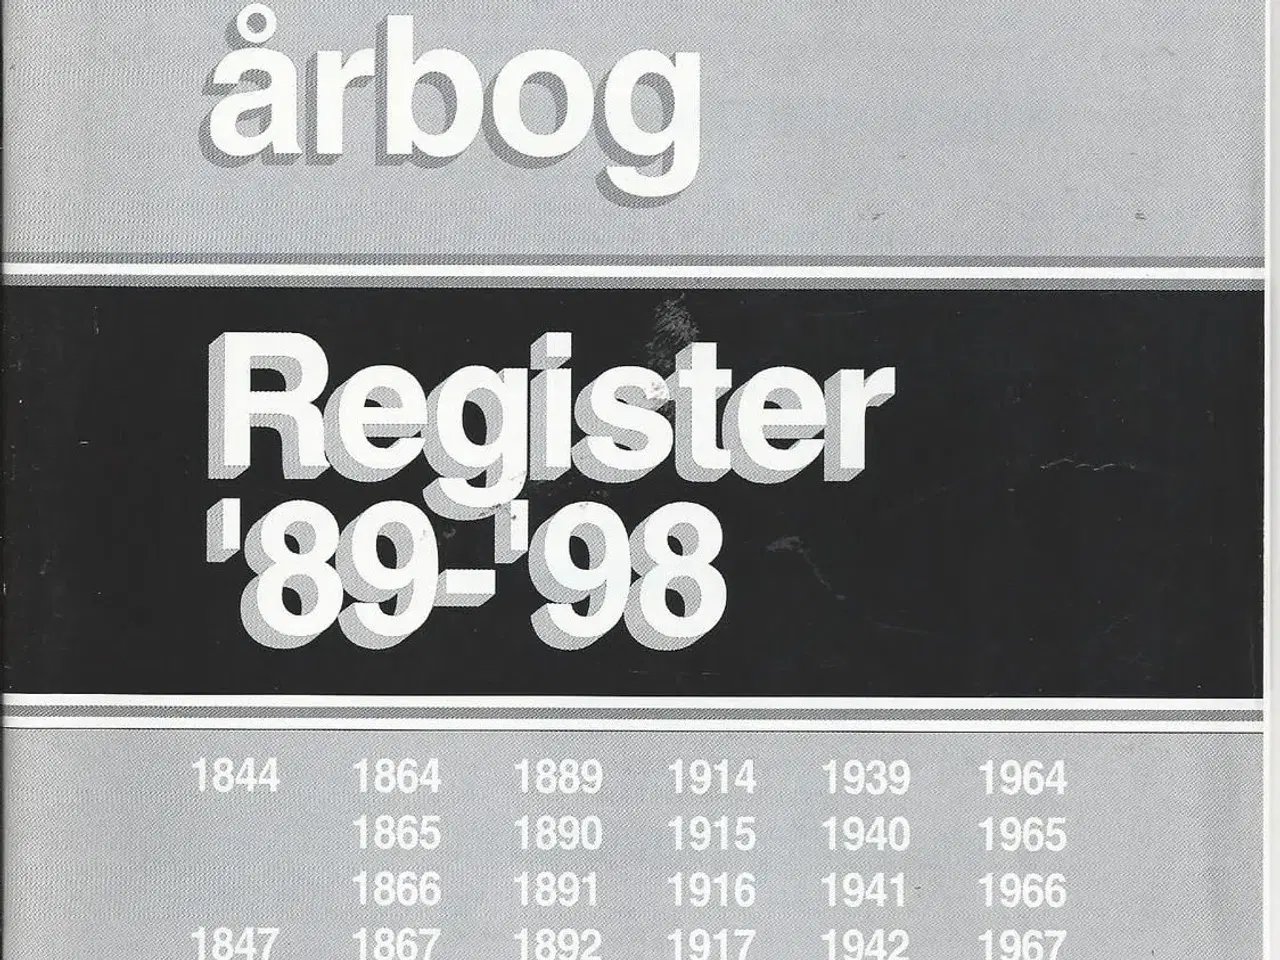 Billede 1 - Jernbane historiek register 1989-1998